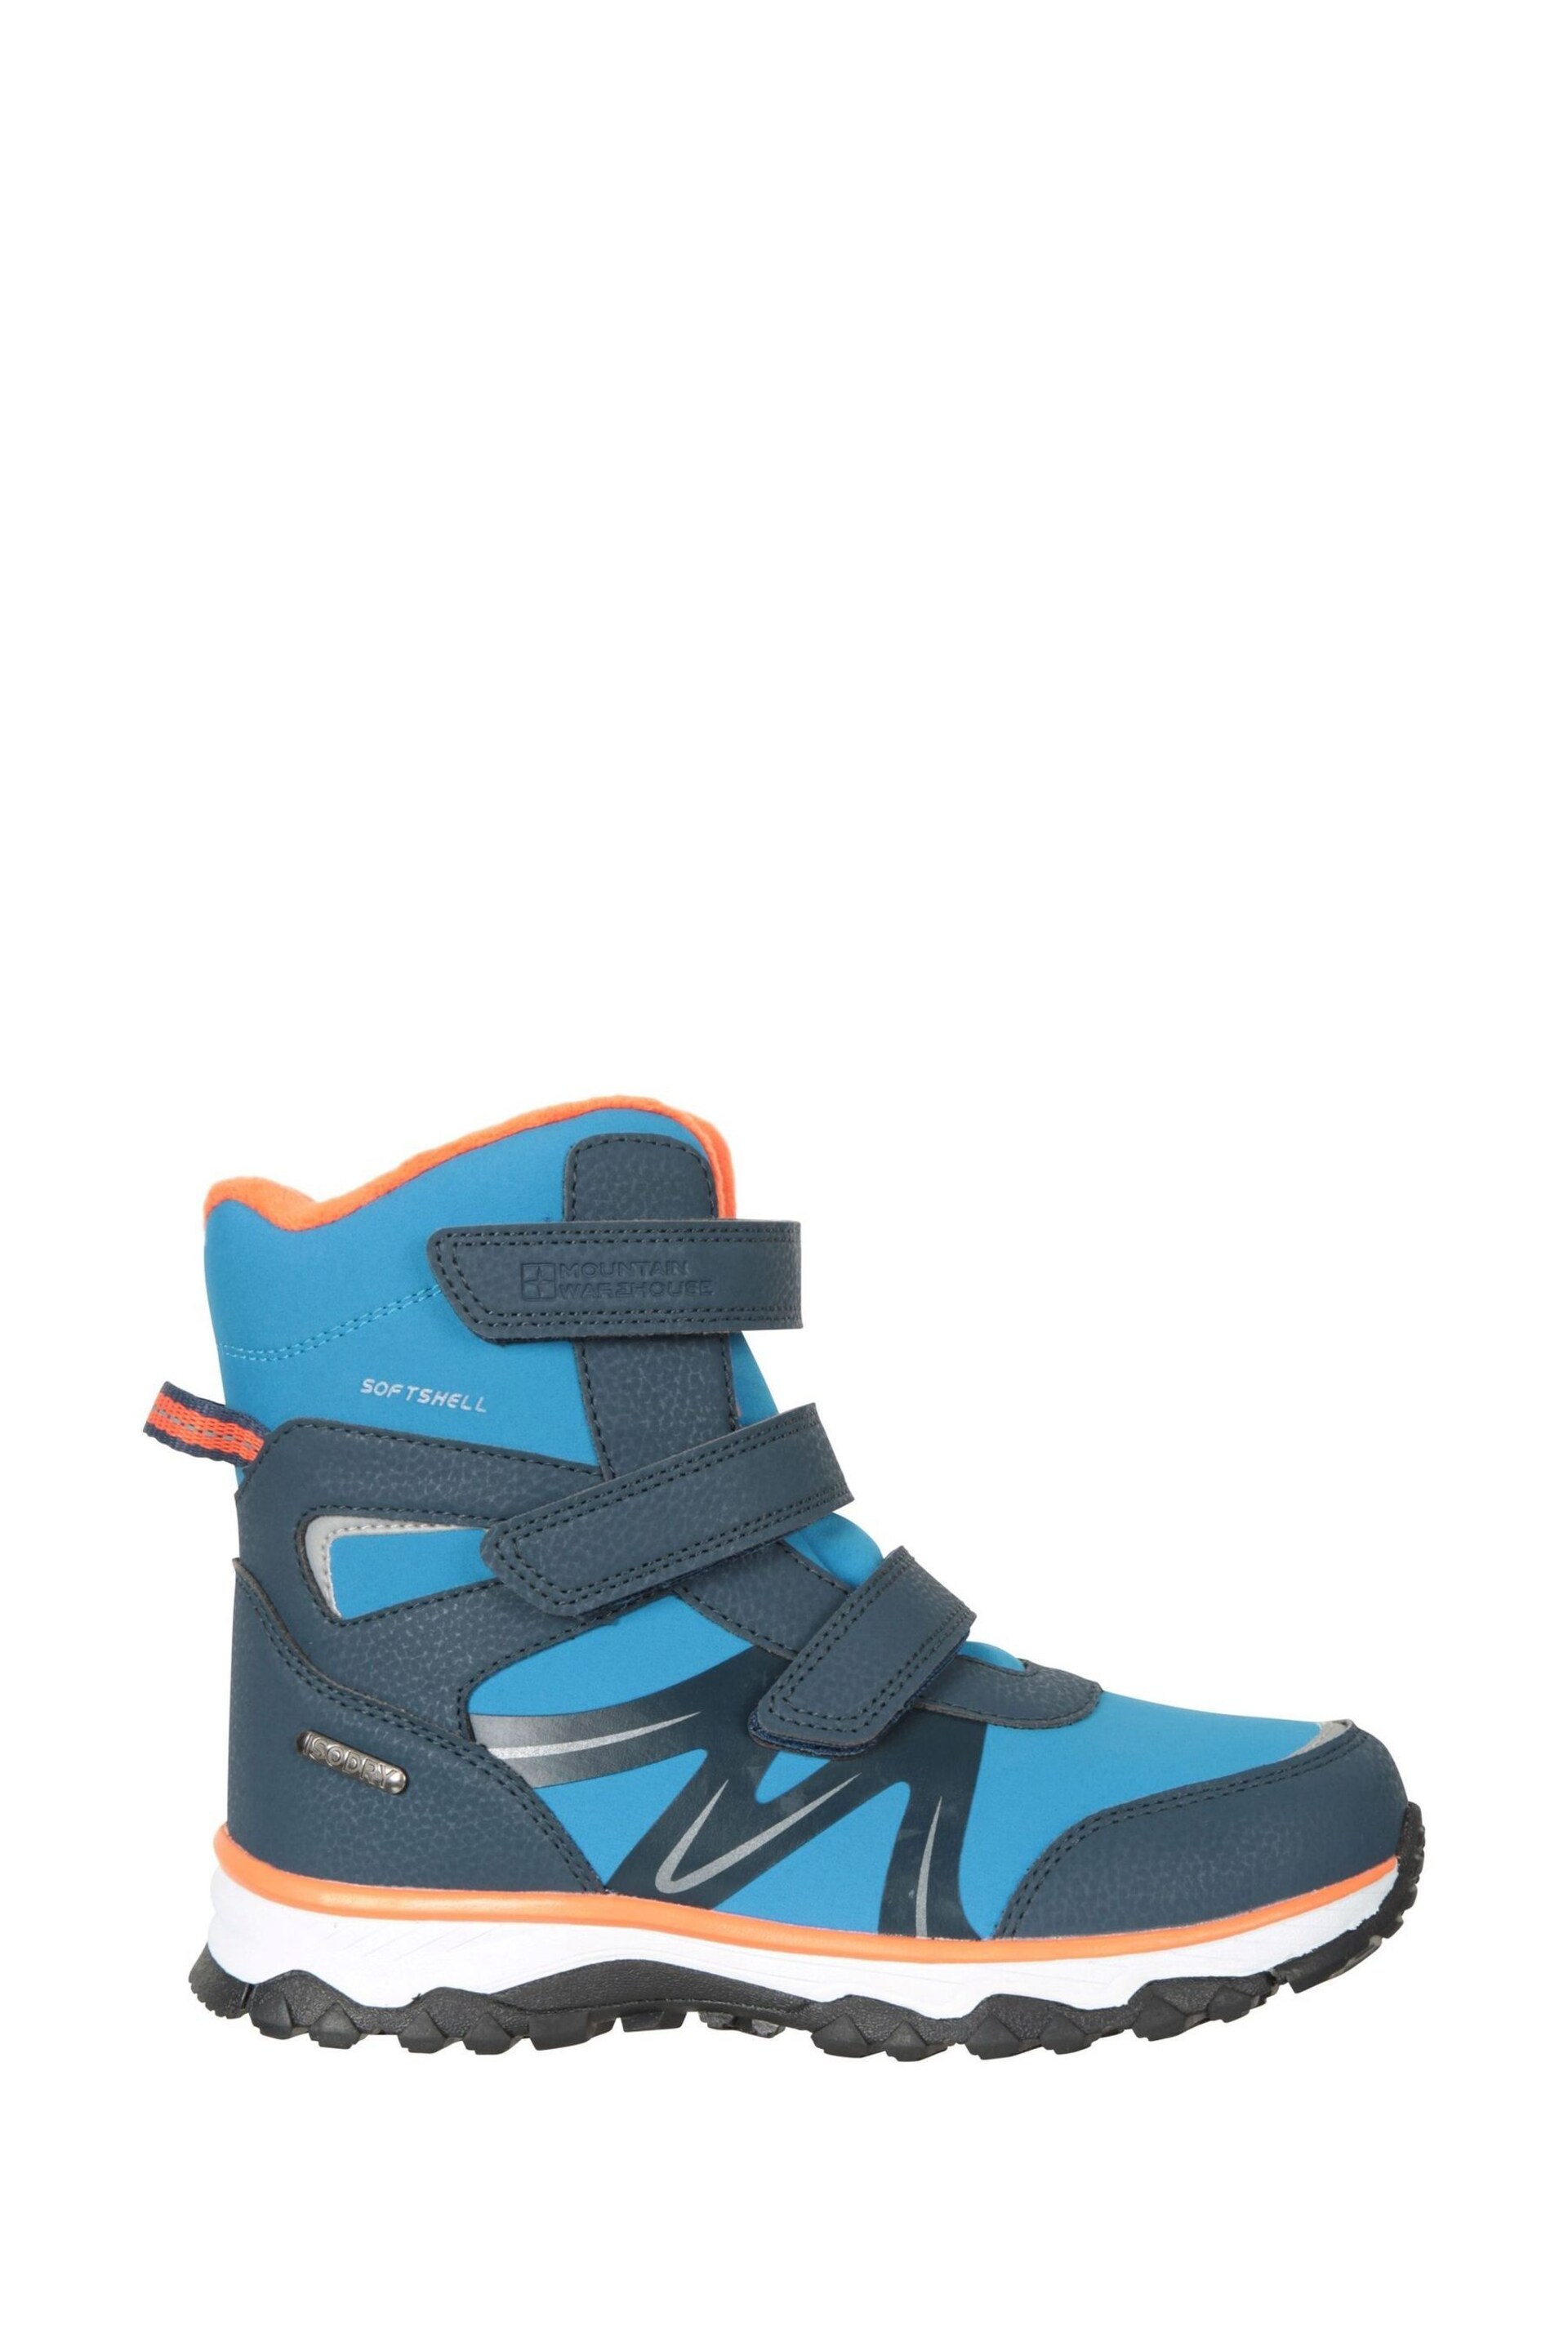 Mountain Warehouse Orange Kids Slope Softshell Snow Boots - Image 2 of 6